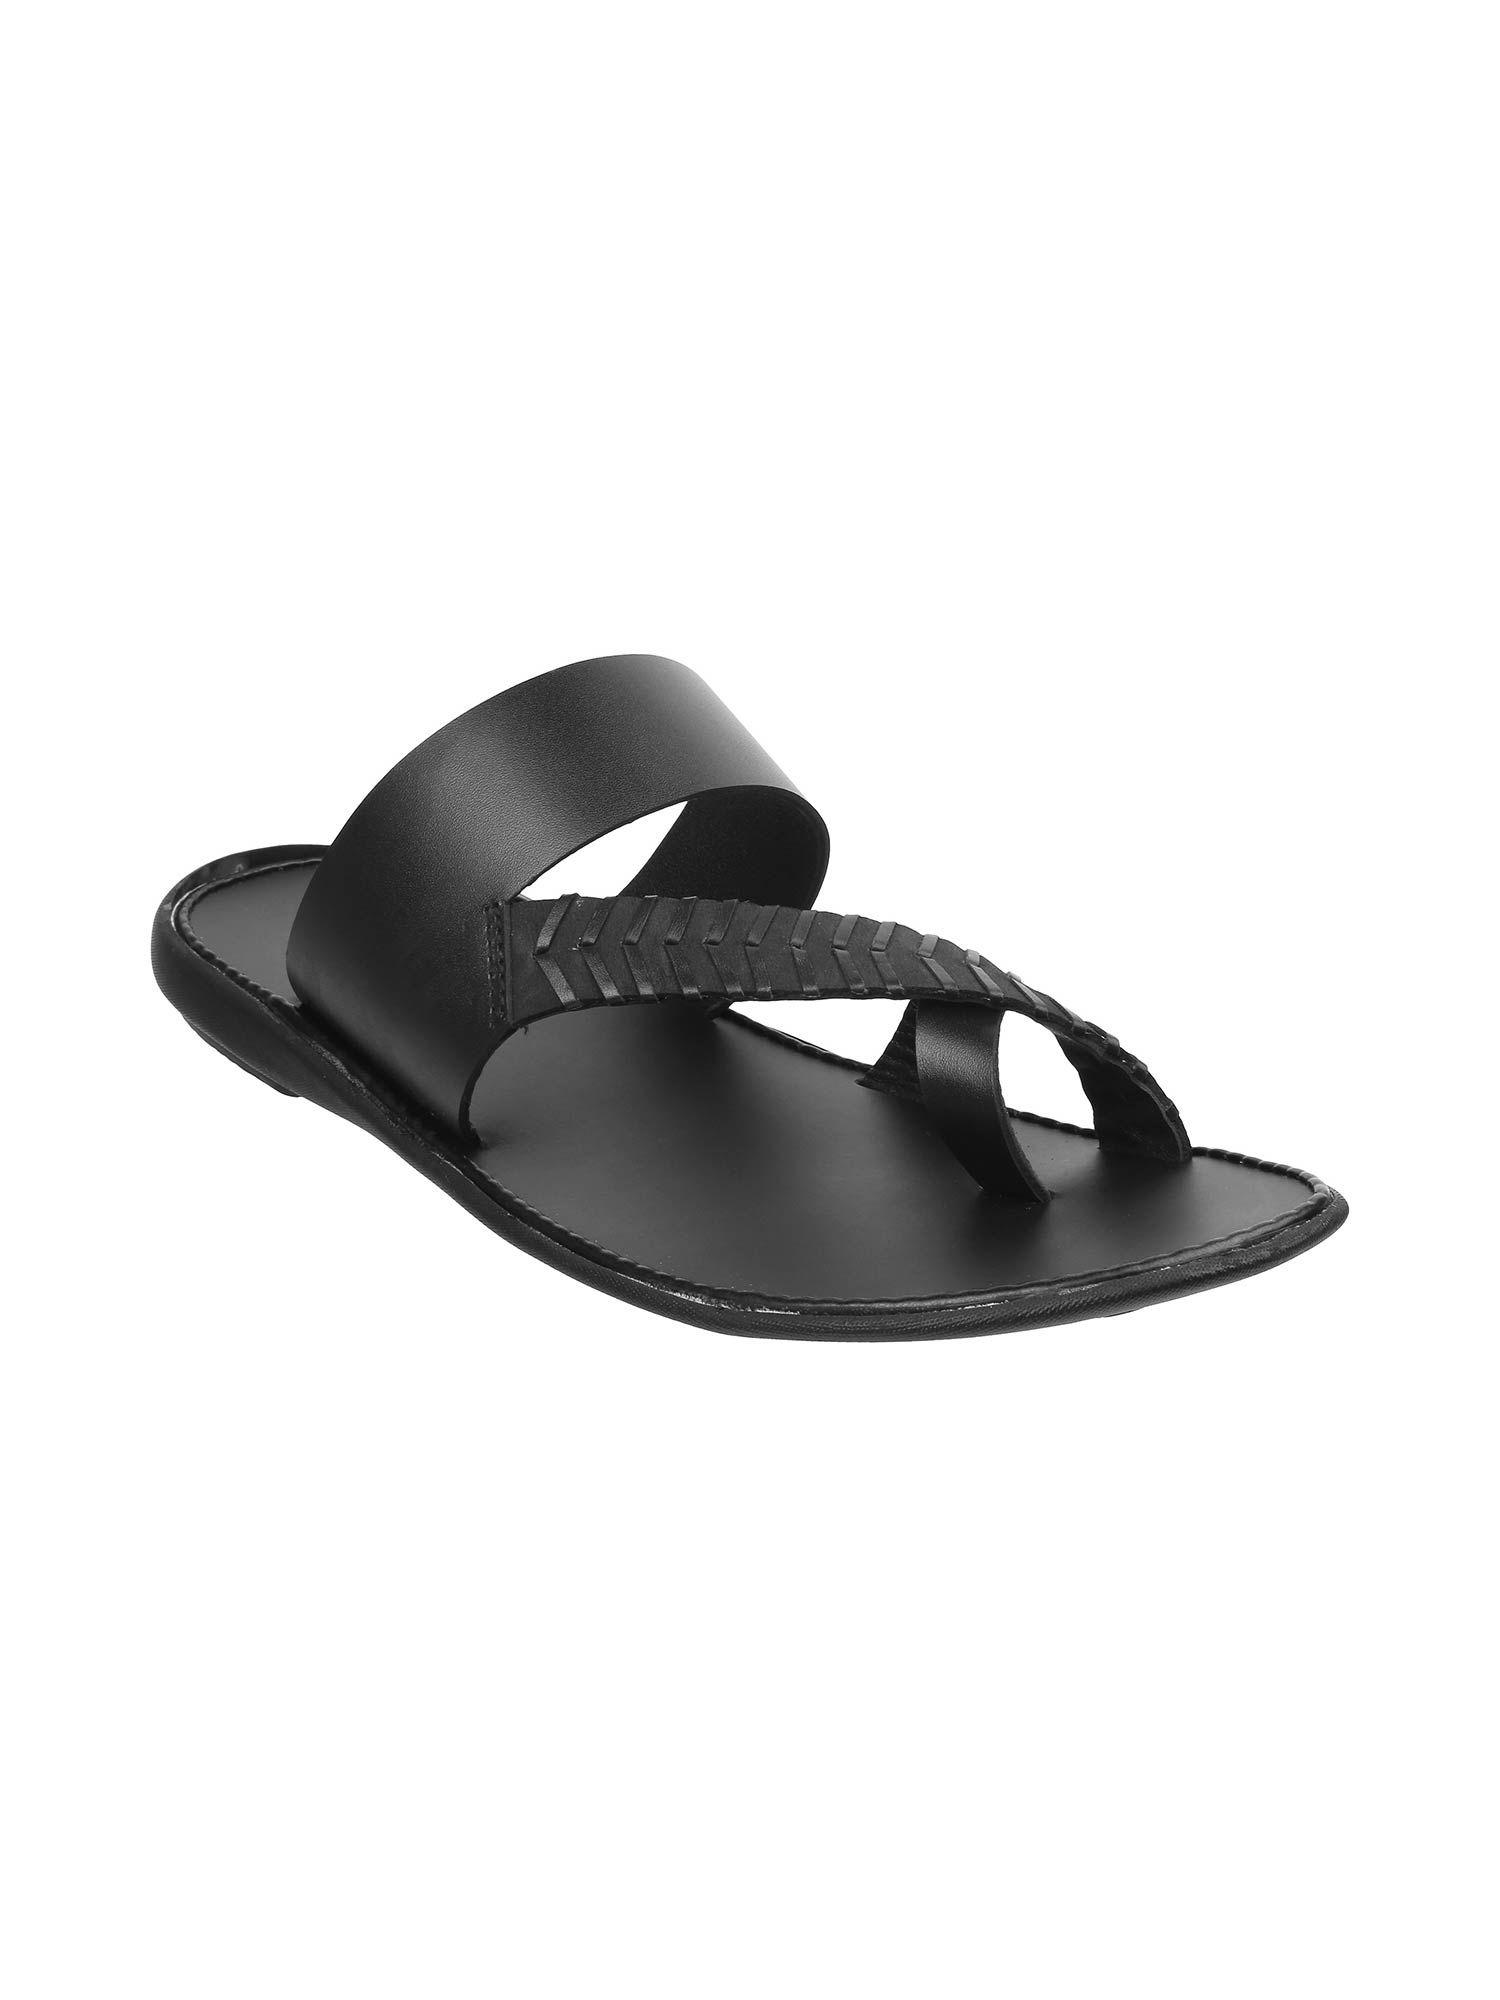 mens black flat chappalsmochi textured black sandals